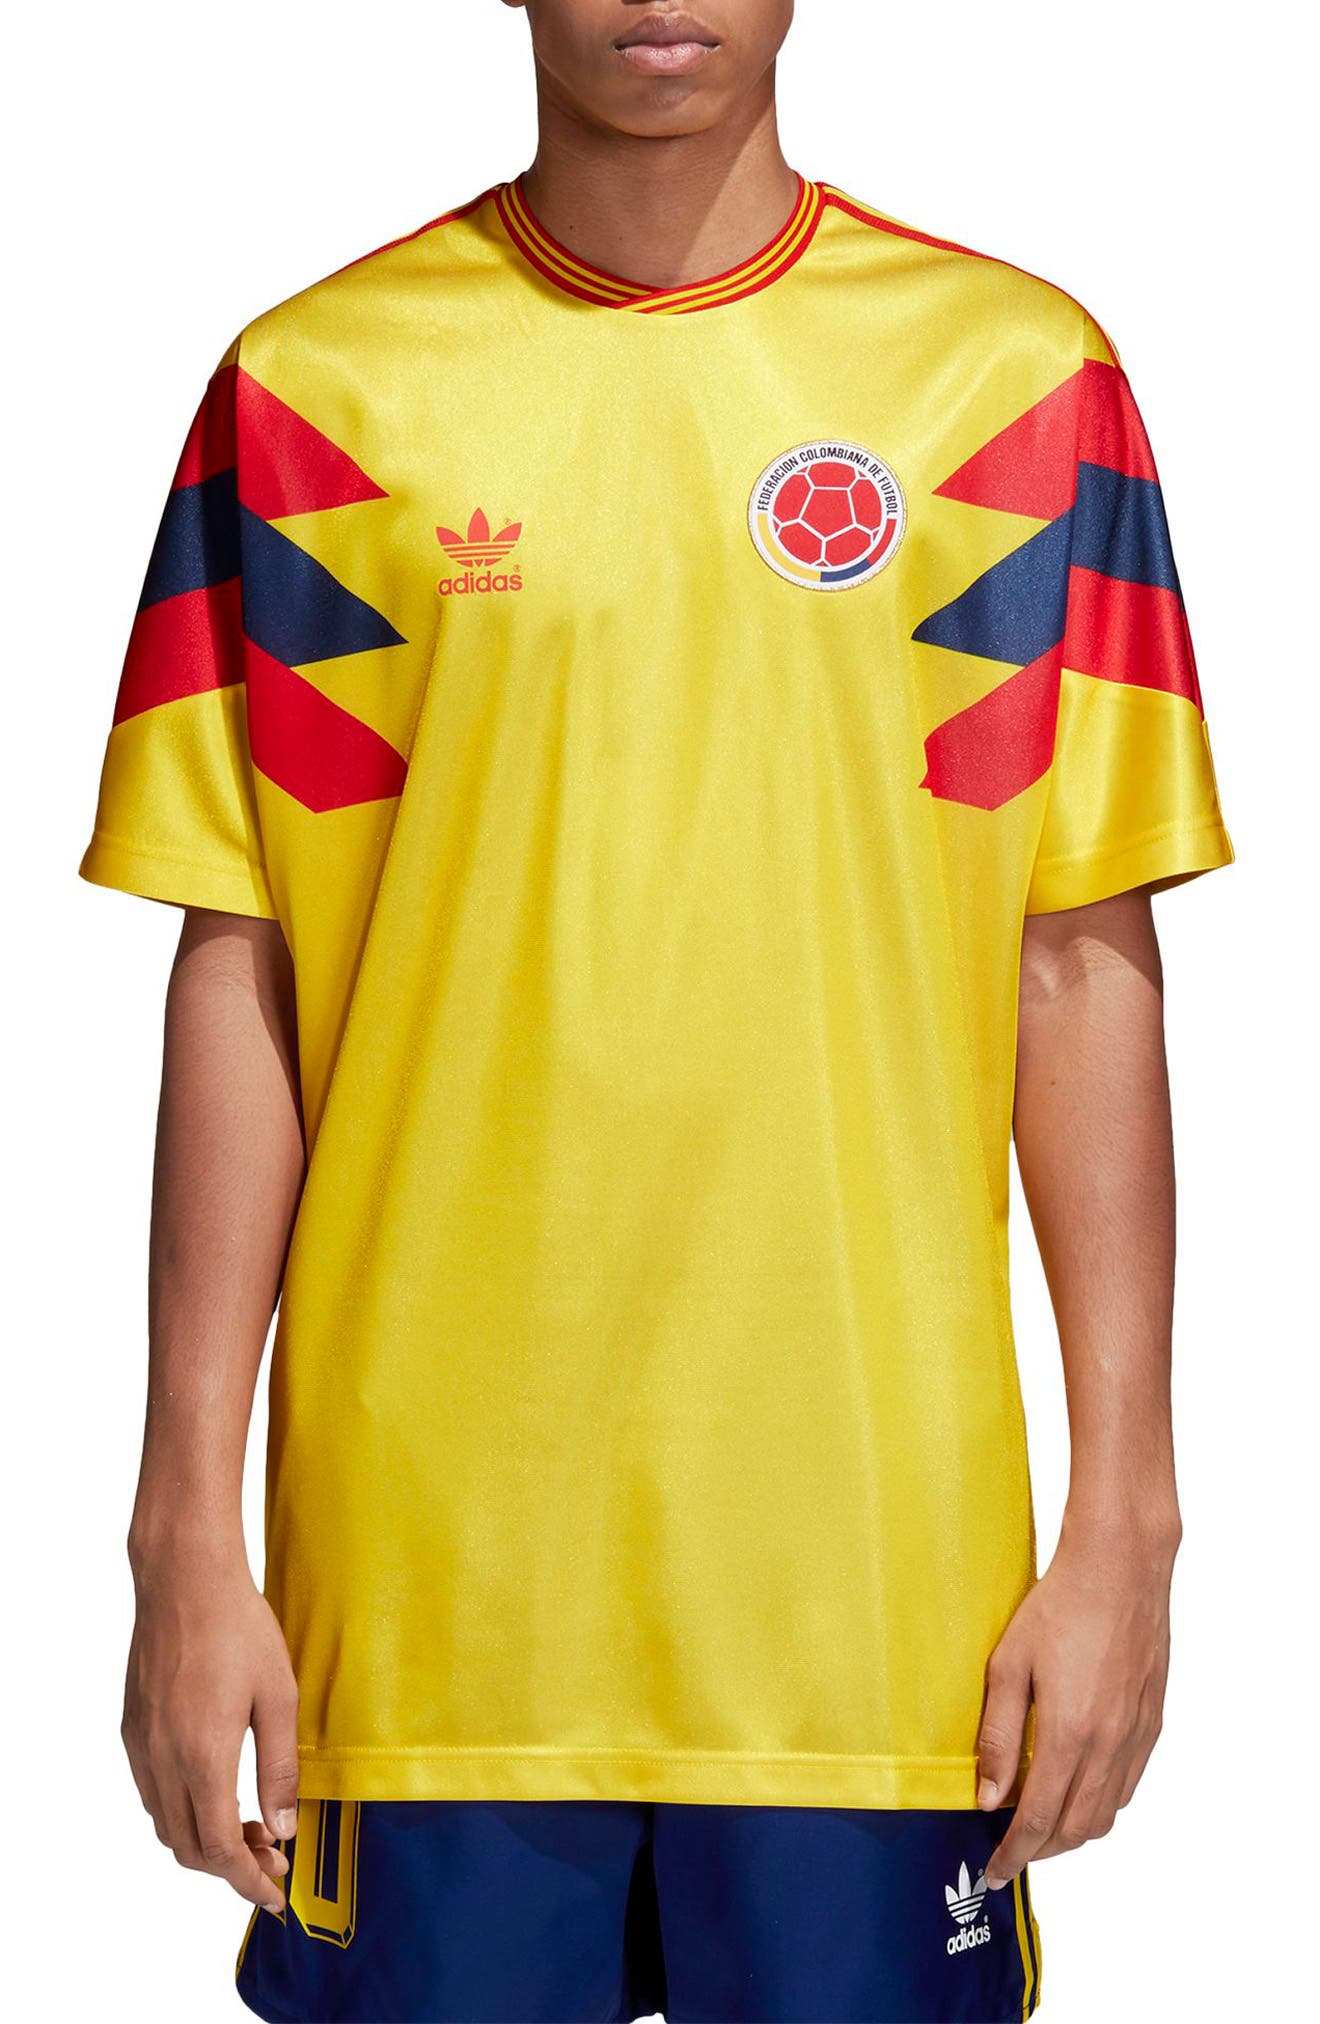 adidas Originals Colombia Soccer Jersey 